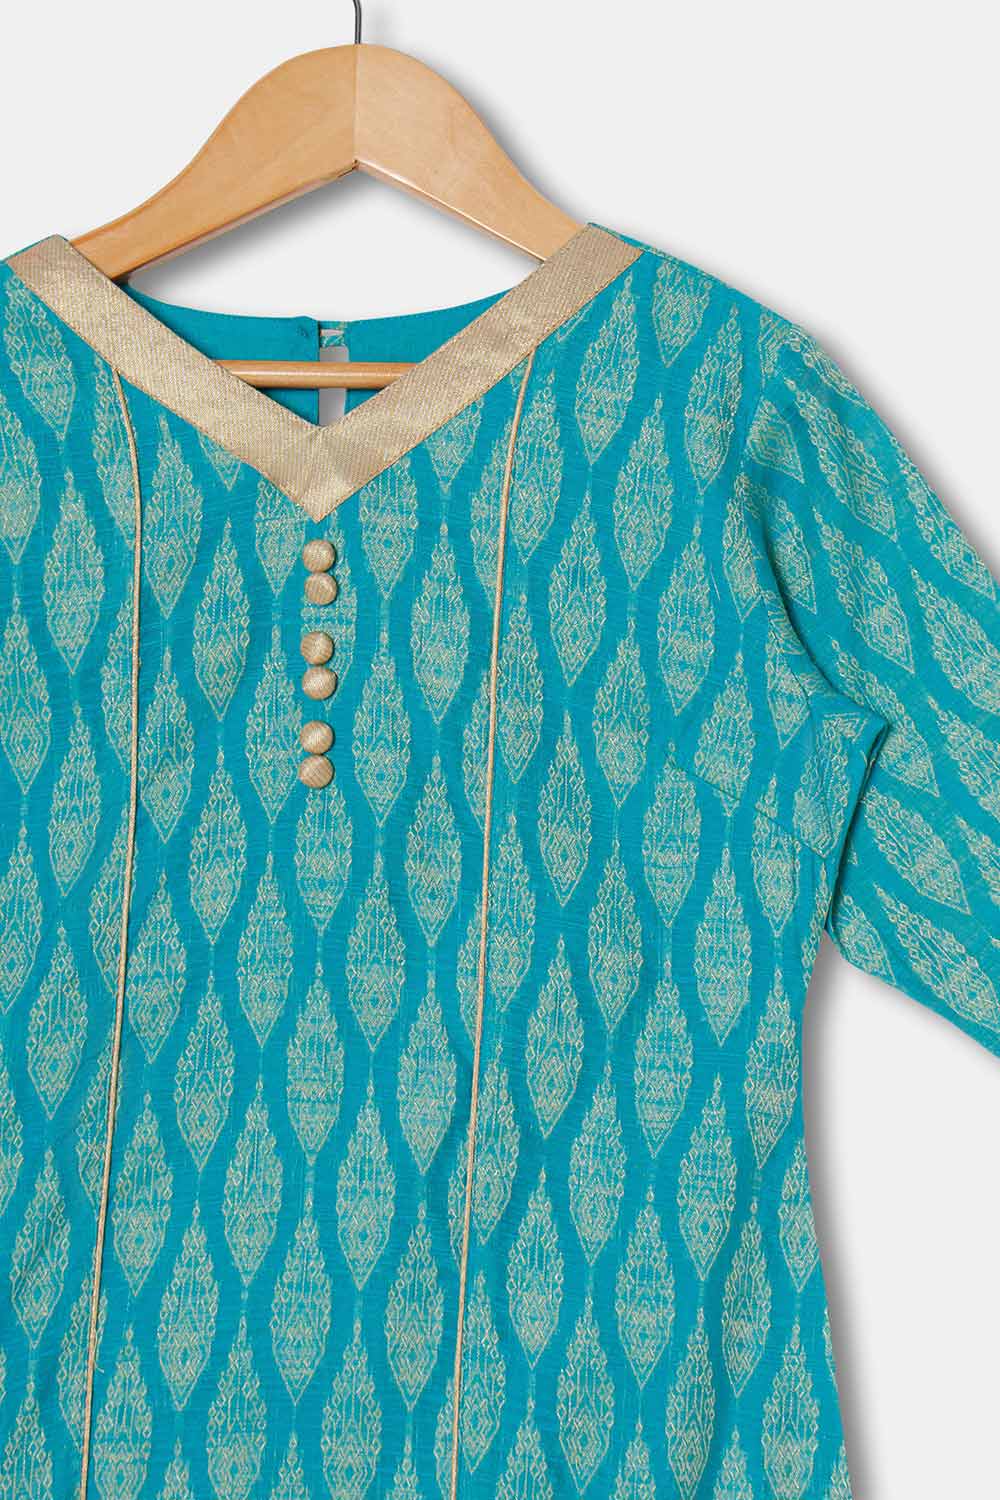 Chittythalli Girls Kurthi Handloom Cotton Regular Fit  - Blue  - KU06